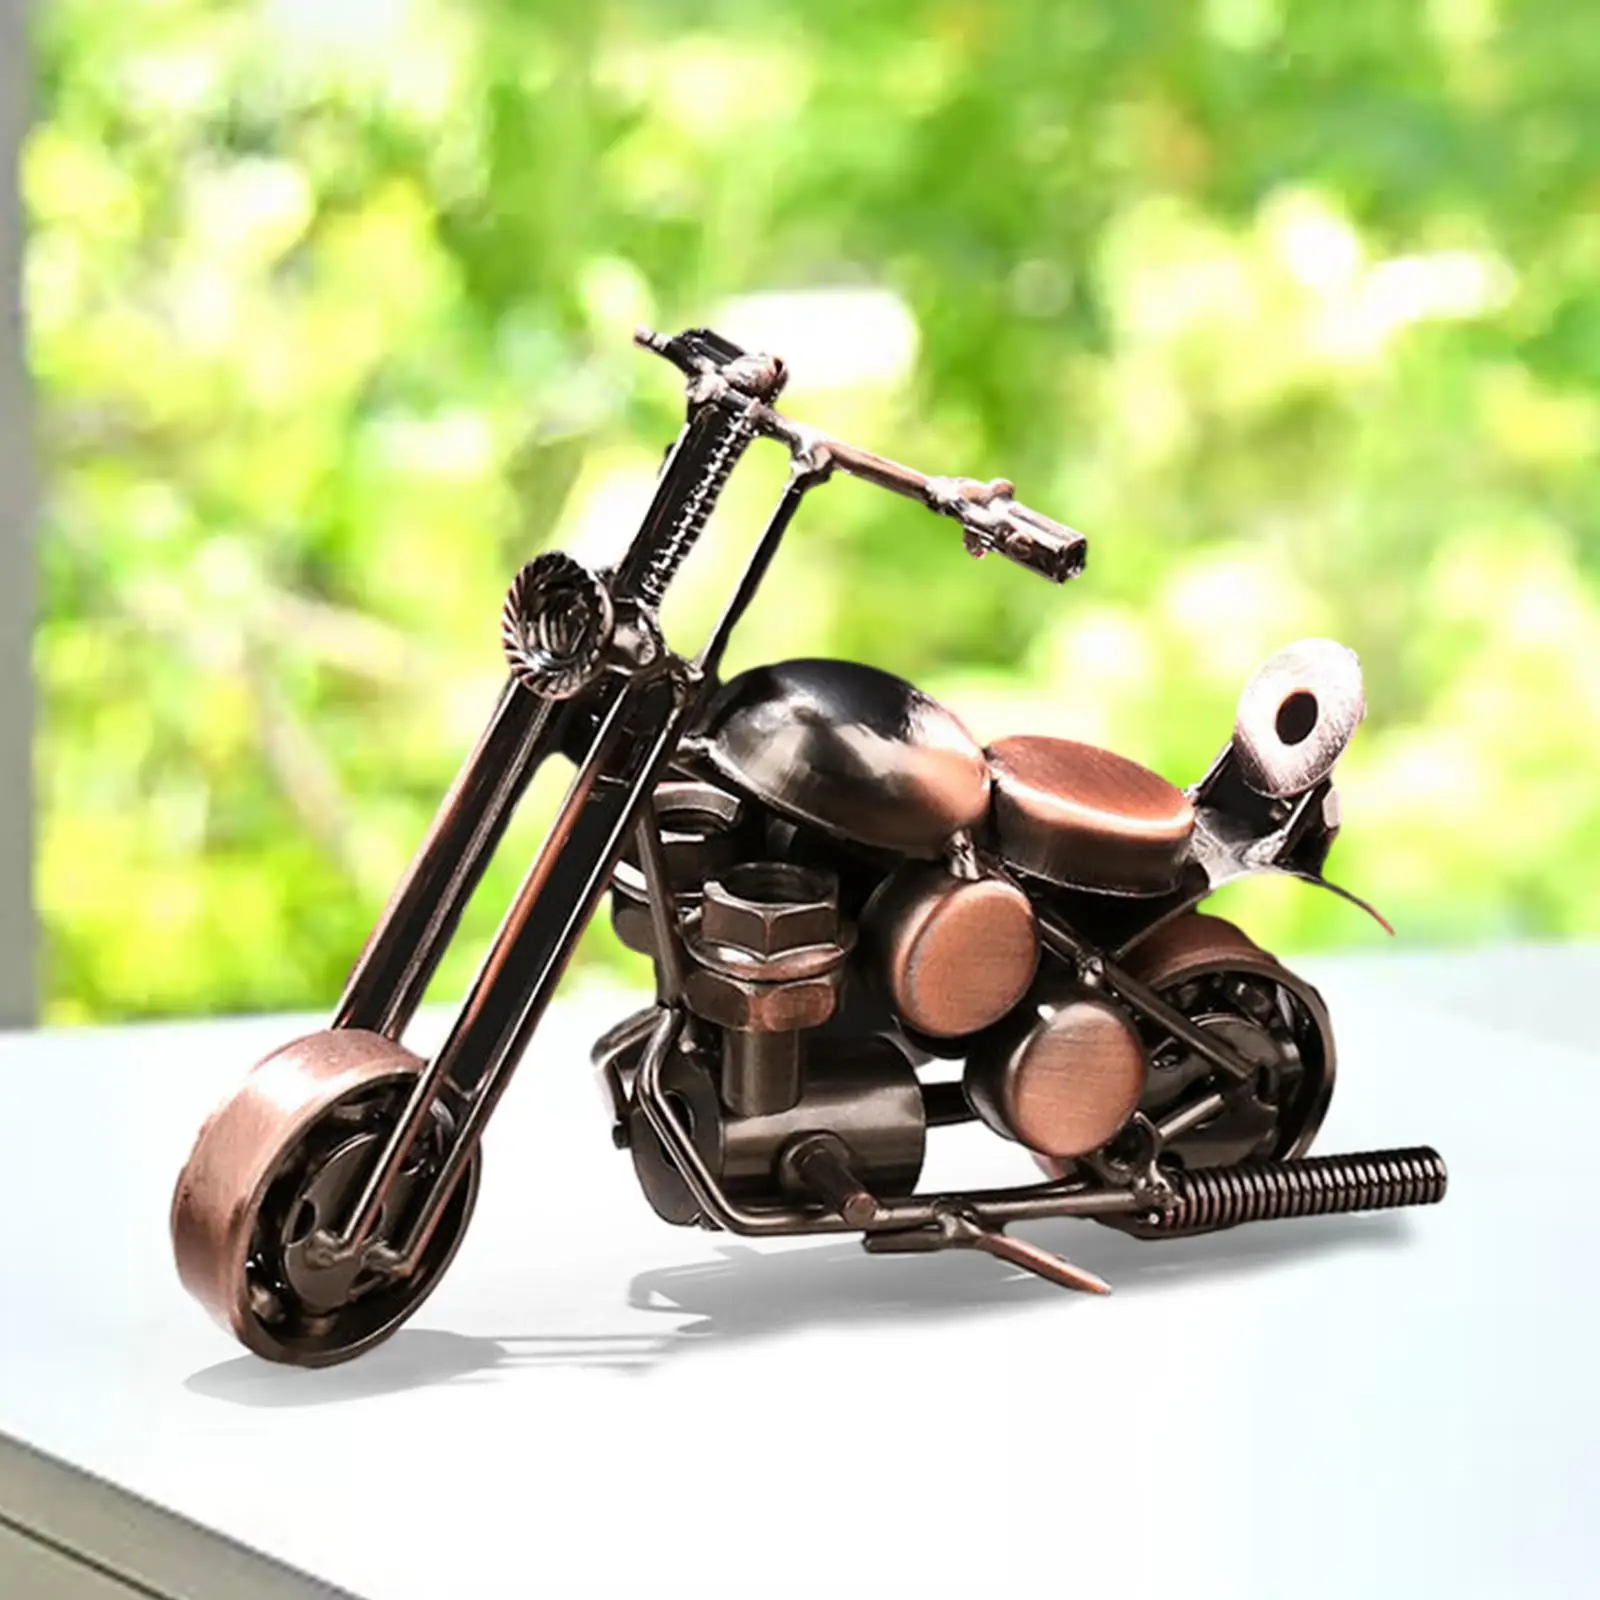 Motorcycle Model Motorcycle Sculpture Iron Photo Props Retro Style Collectible for Desktop Bookshelf Boys Son Boyfriend